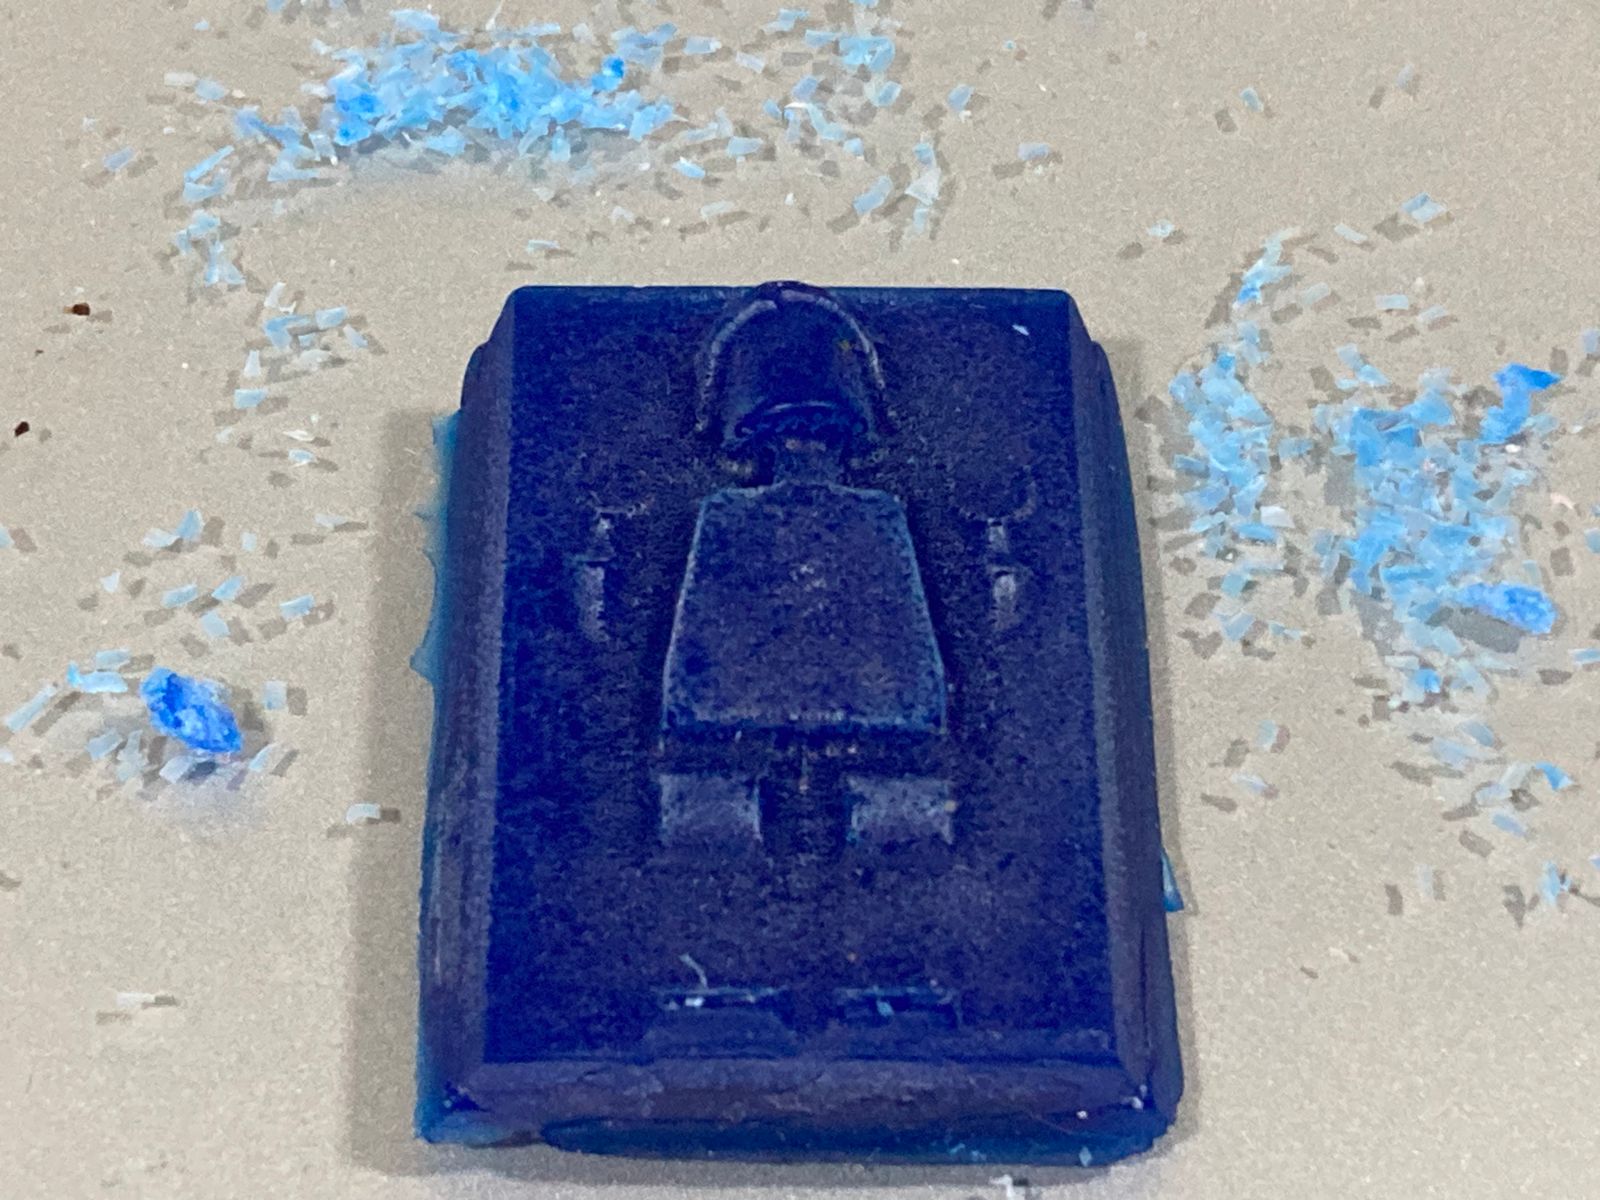 3D Model of Han Solo in Carbonite